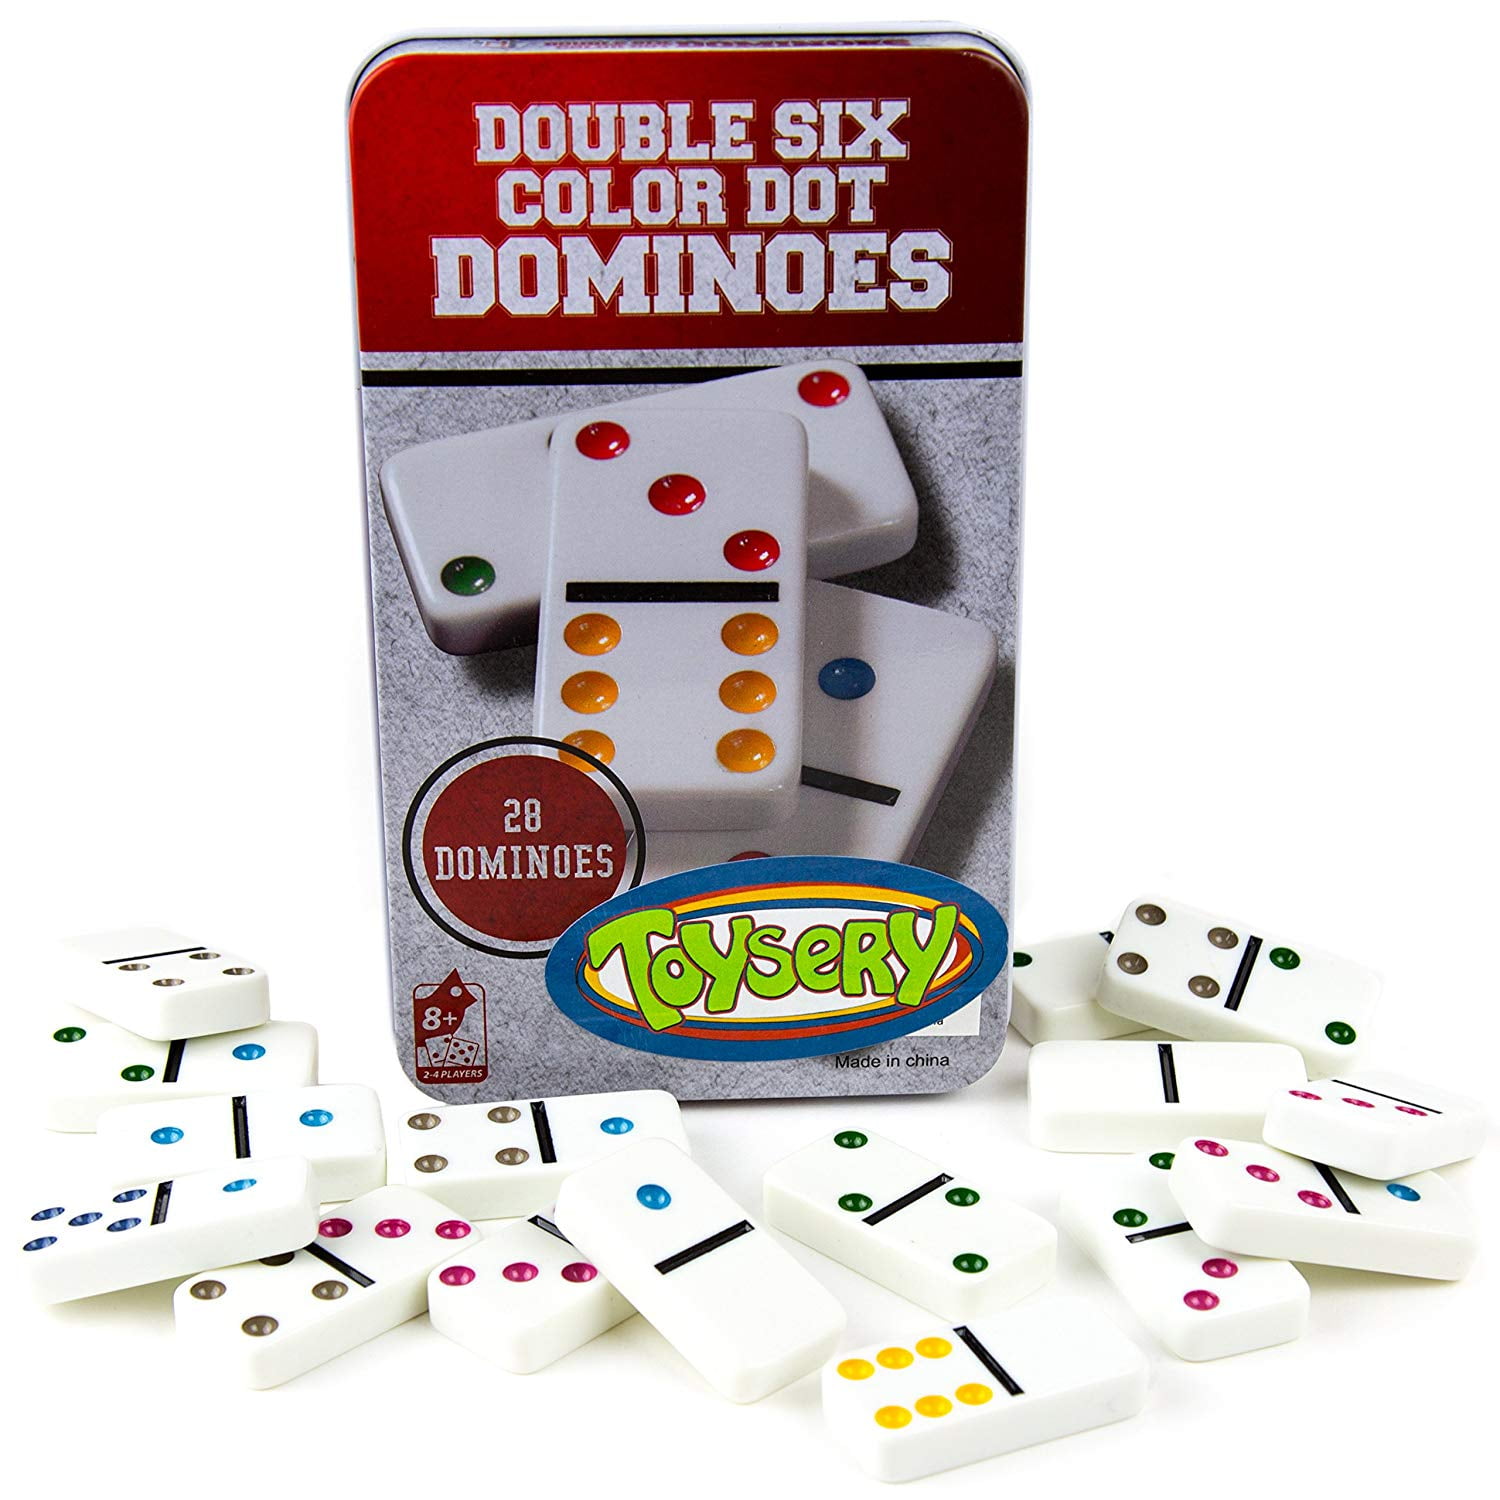 Beige/Black Dots Dominoes Double six Jumbo Set of 28 Brand New 